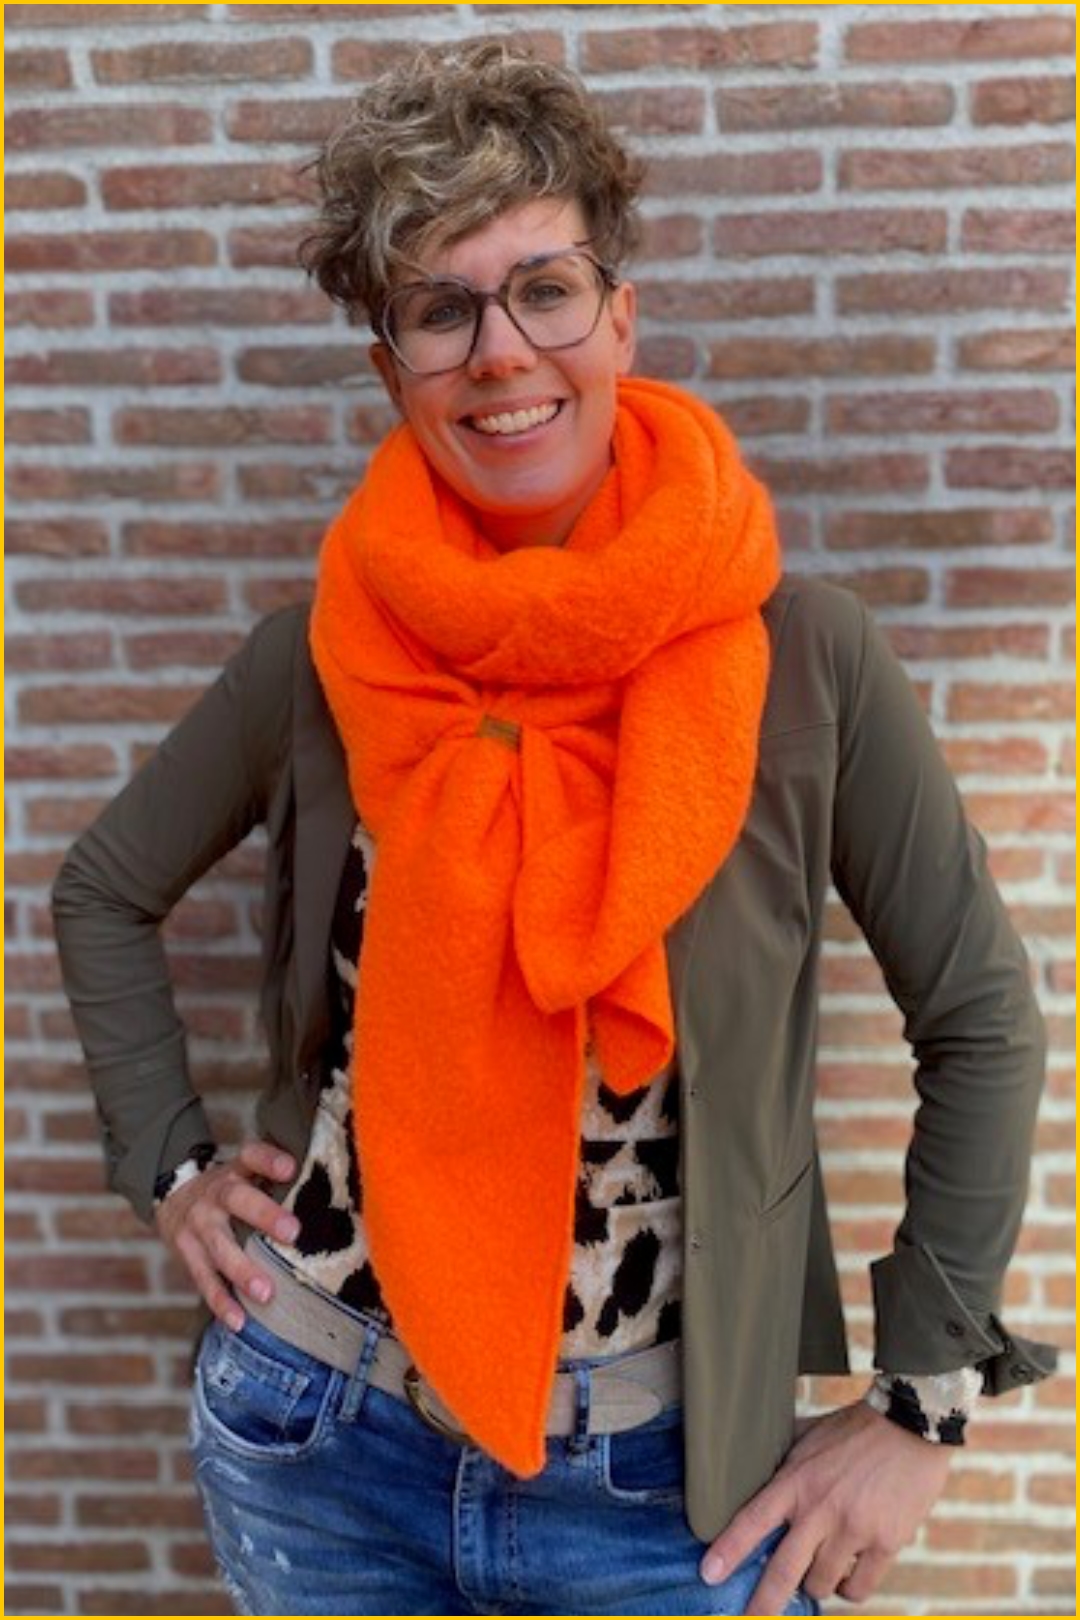 Inuz sjaal oranje